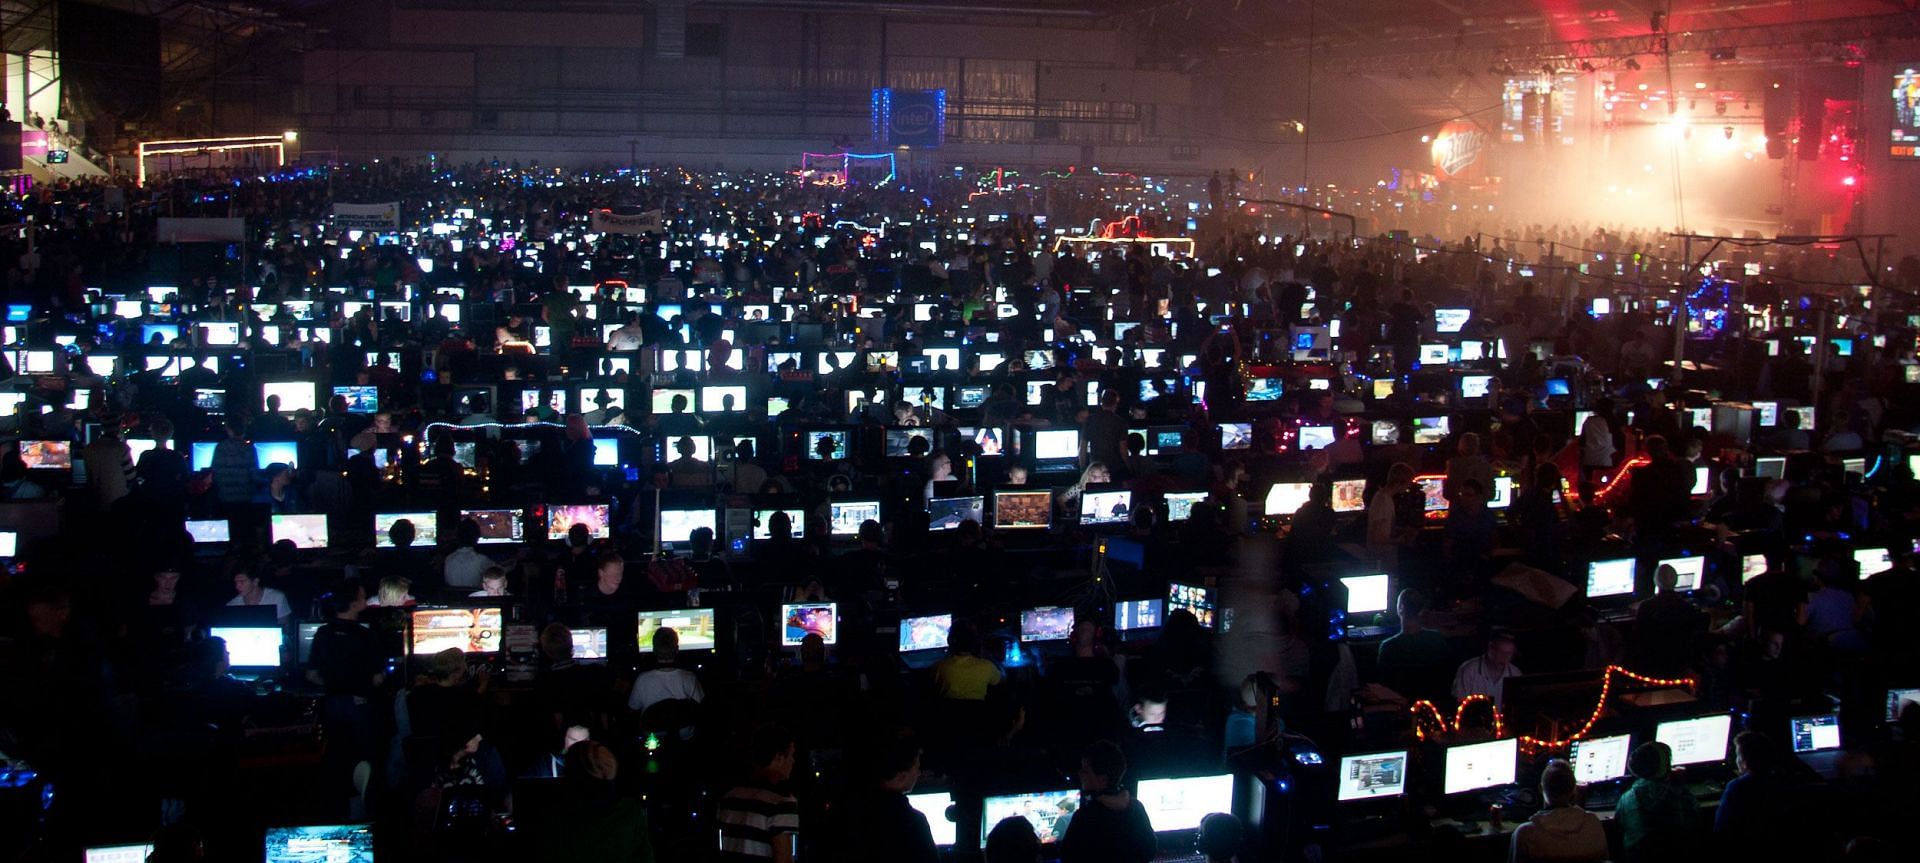 LAN tournament (Image via Google Images)